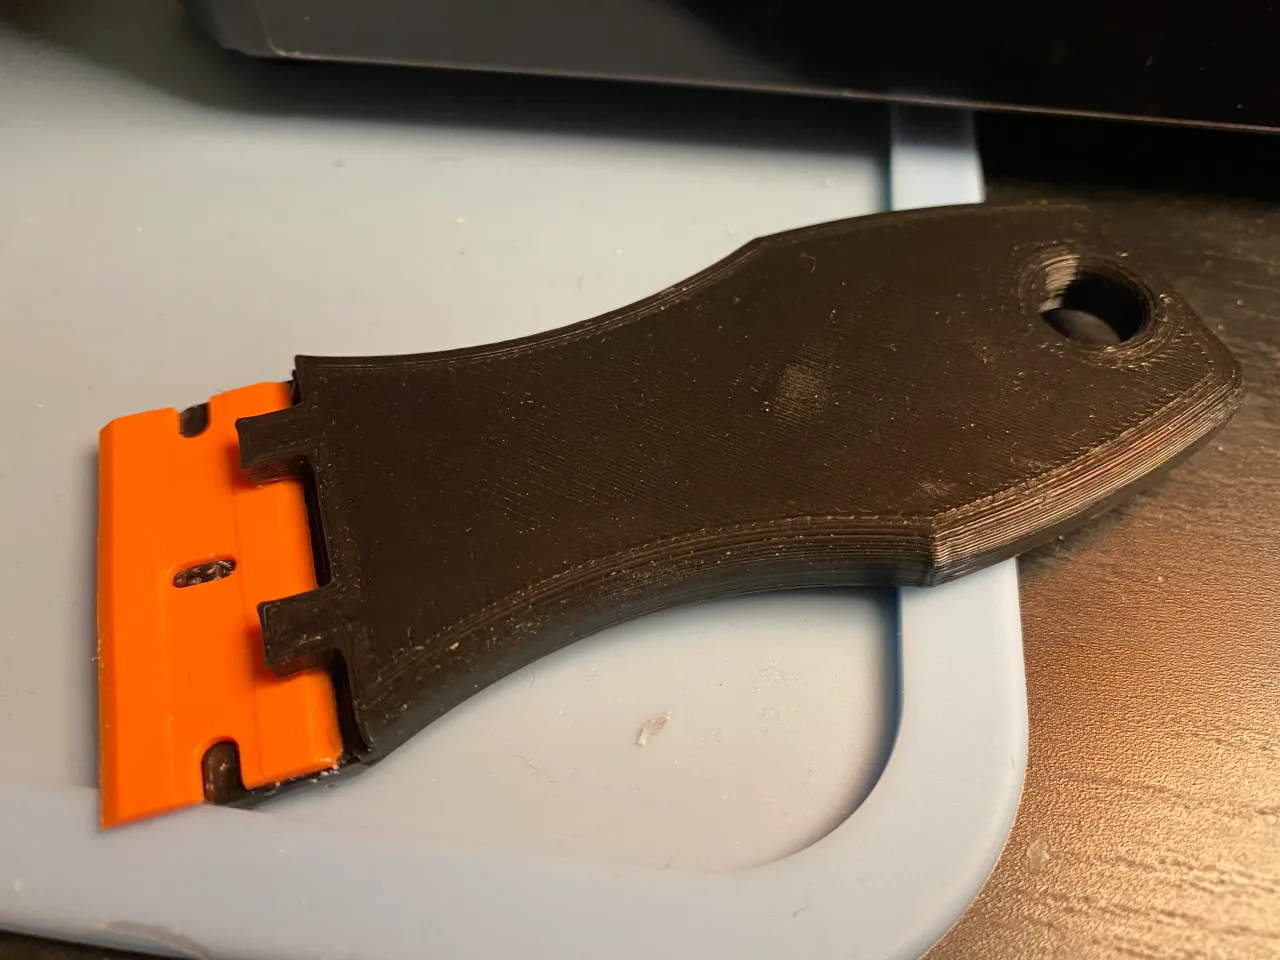 Plastic razor blade scrapers are amazing : r/3Dprinting